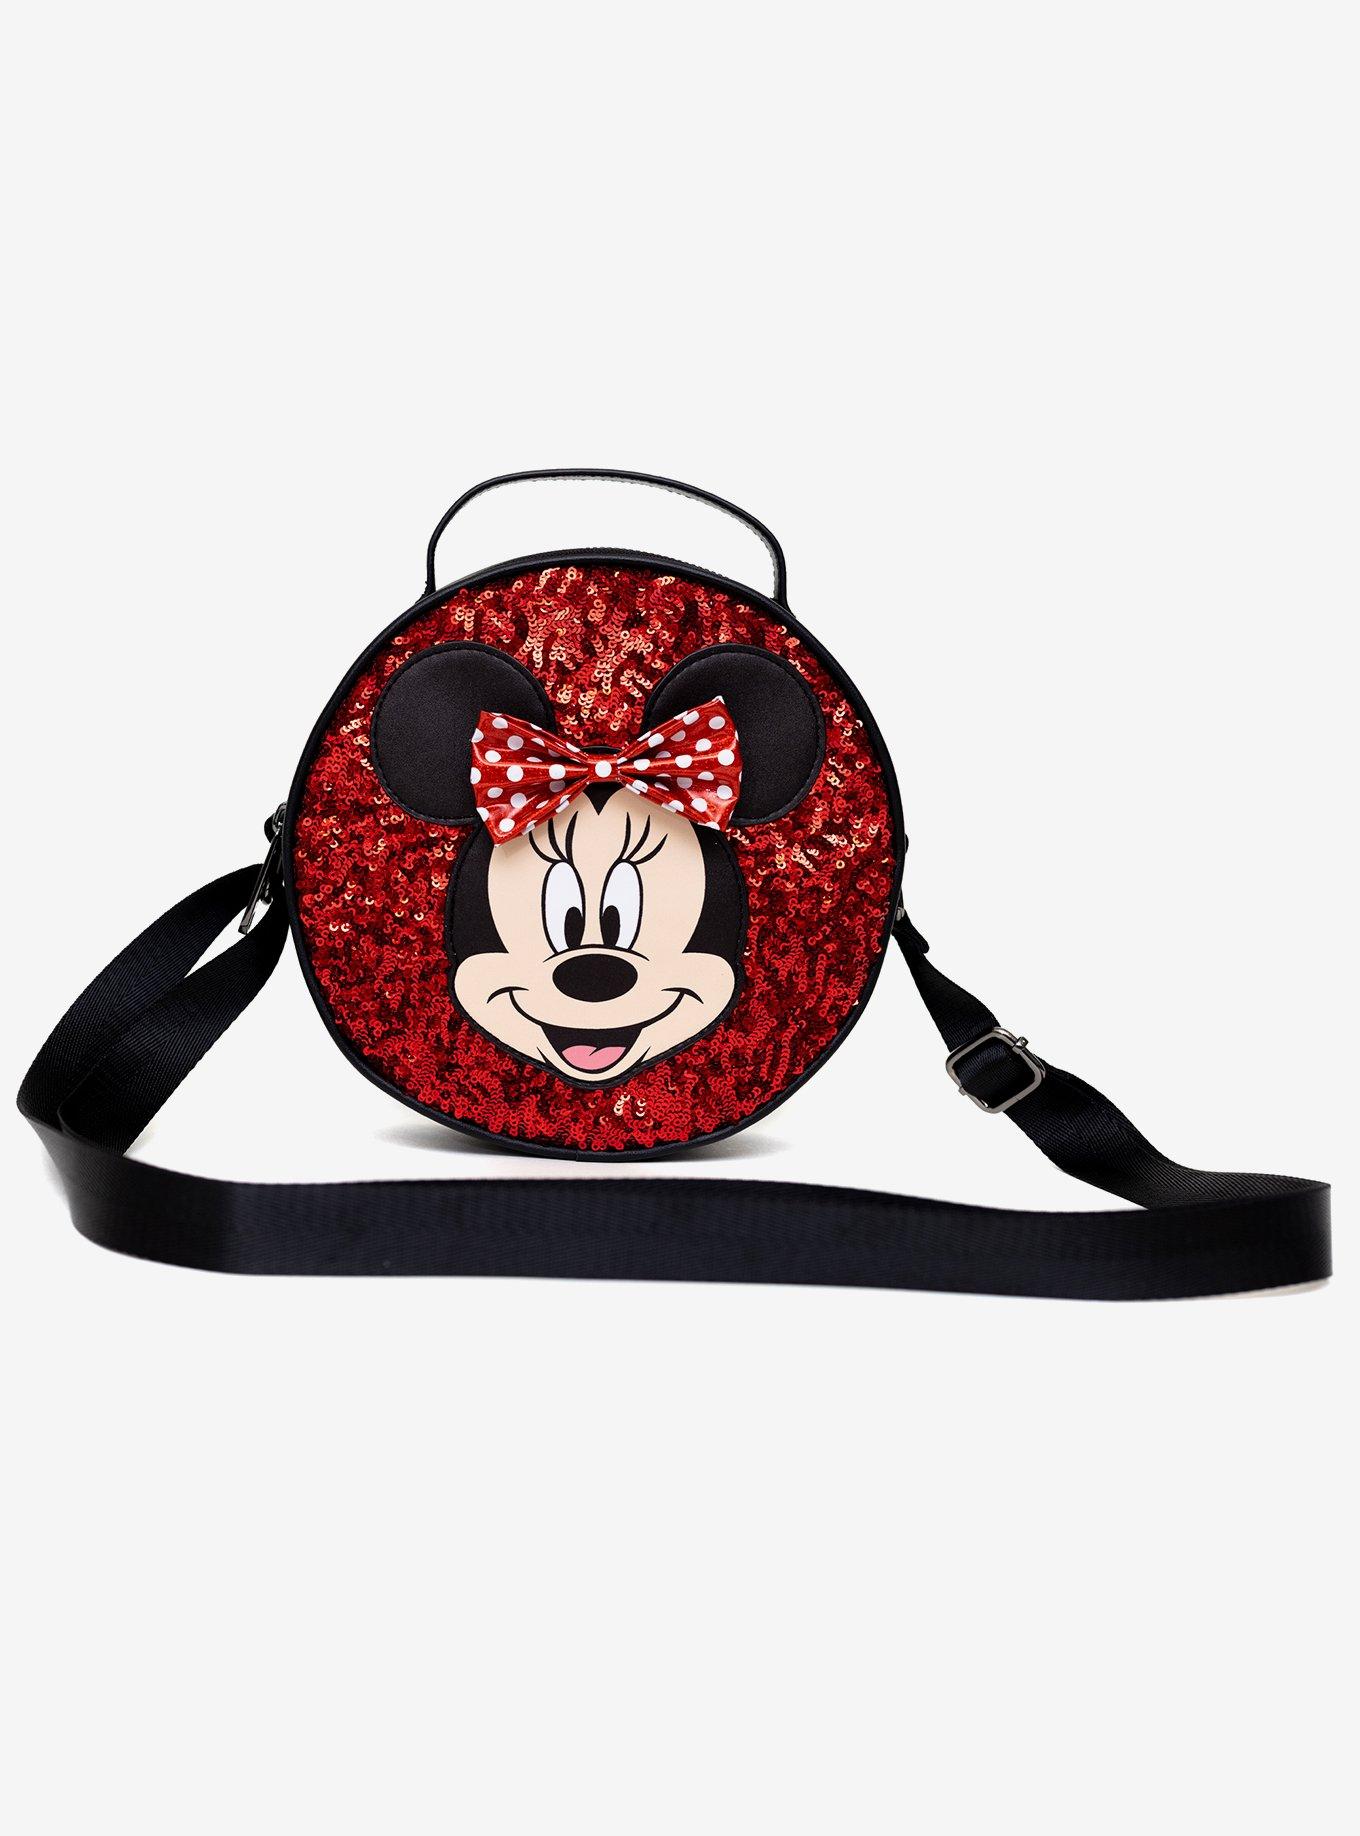 Disney Minnie Mouse Bow Applique Red Sequin Crossbody Bag